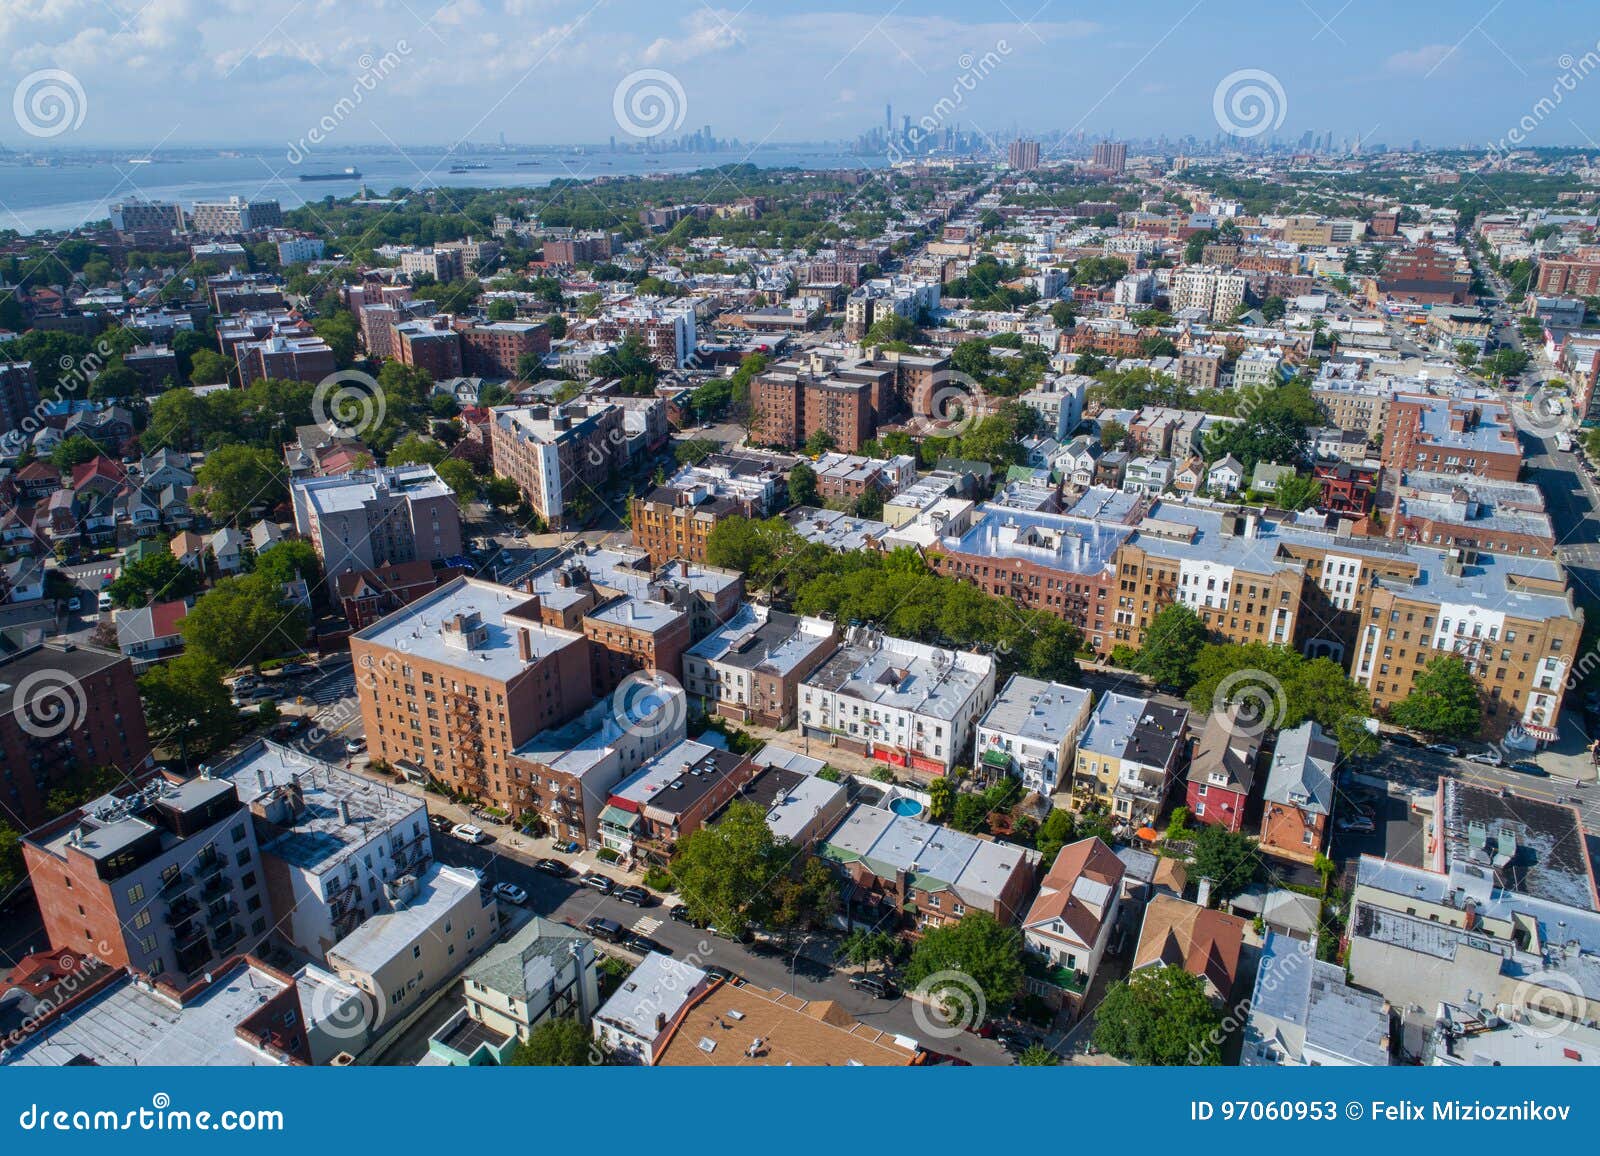 Aerial Image of Bay Ridge Brooklyn New York Stock Image - Image of